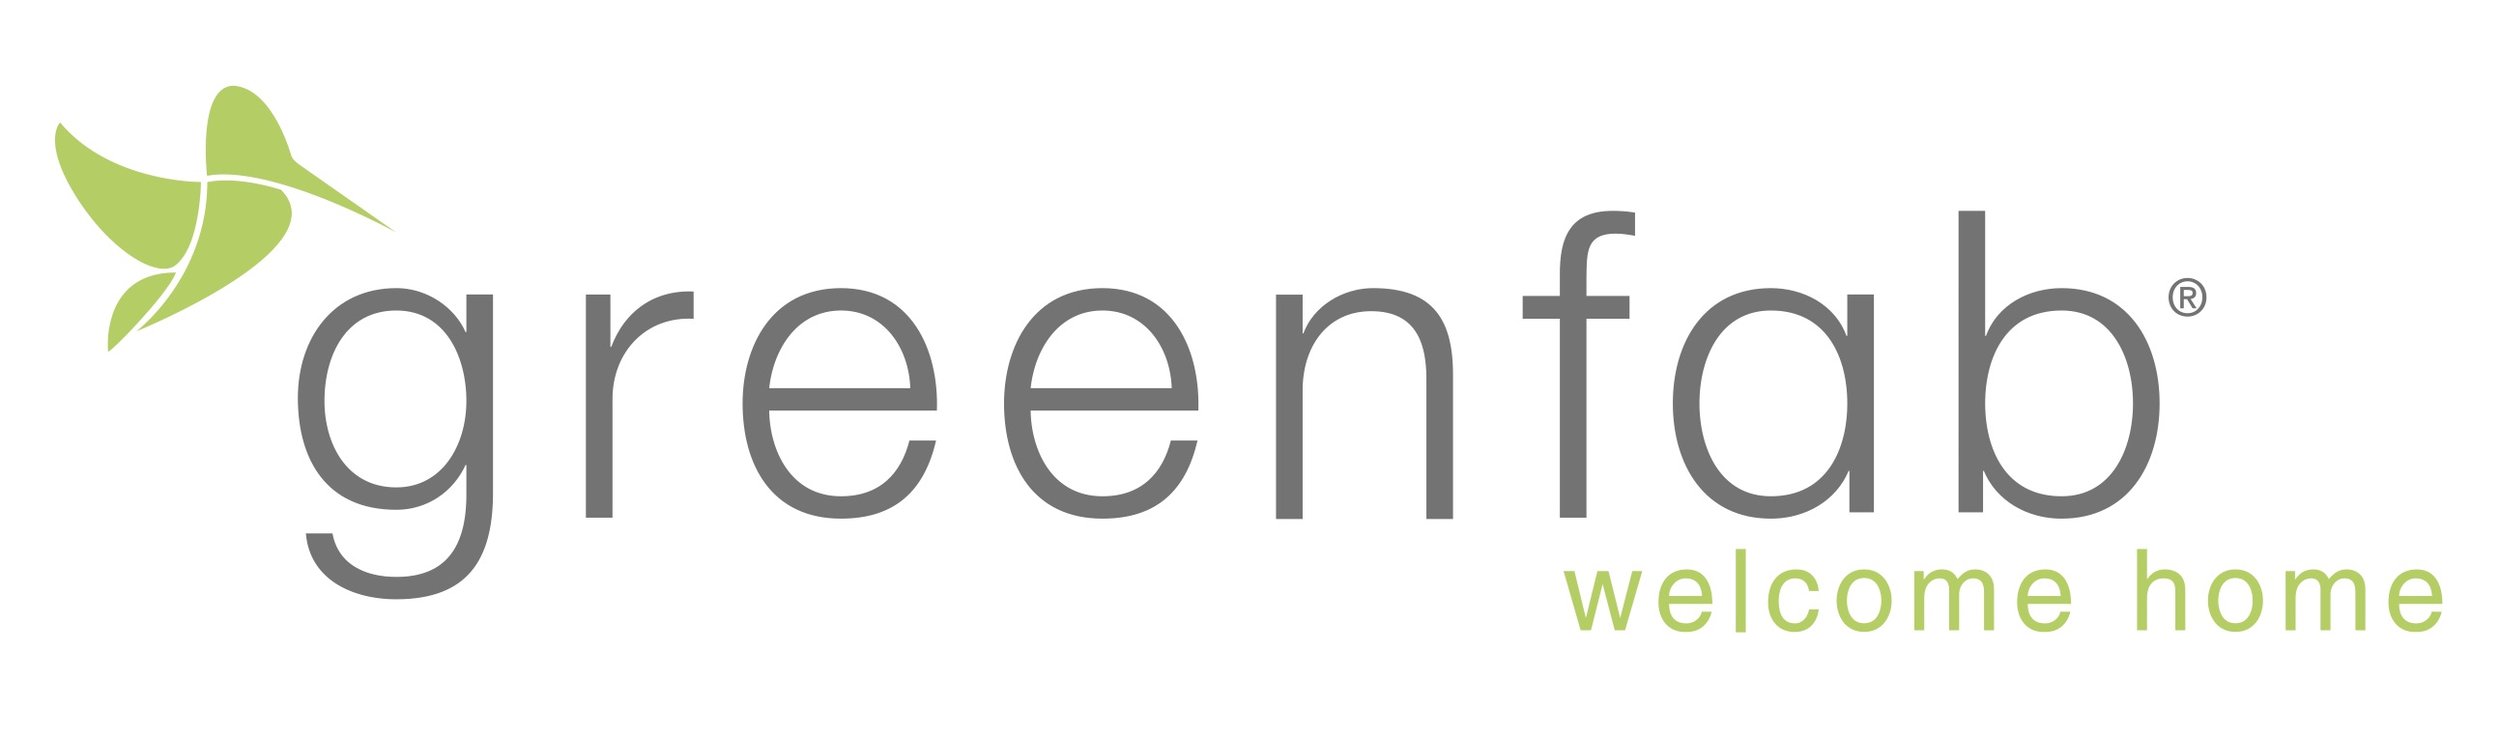   Case Study: GreenFab Brand Development   Strategy/Content/Execution 